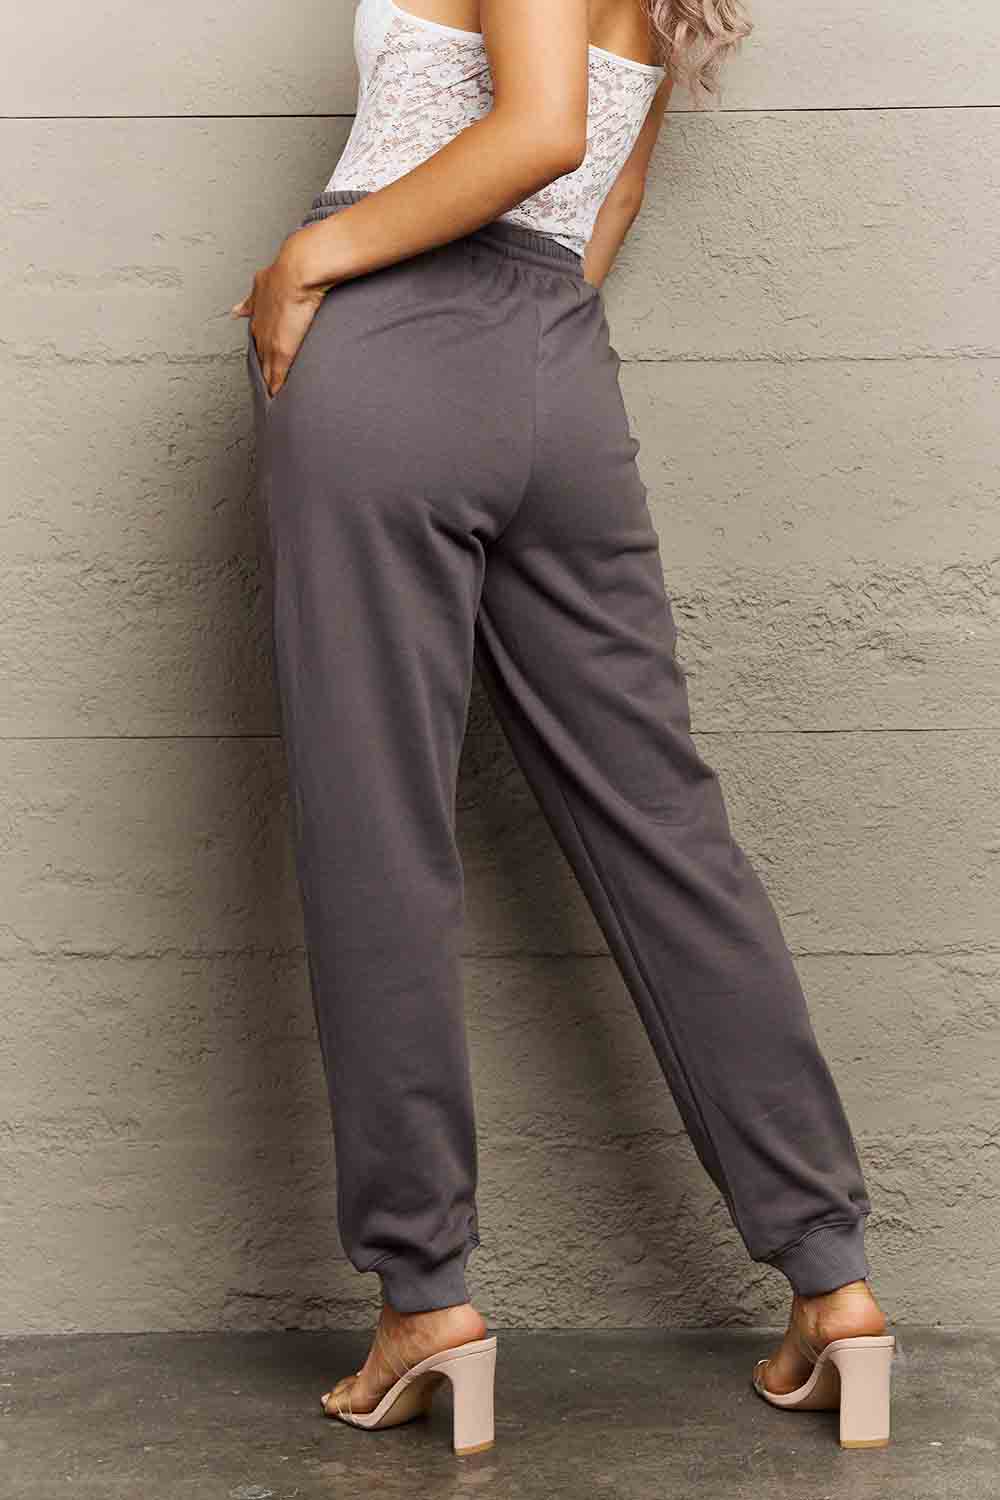 Simply Love - Wenge - Full Size Drawstring DAISY Graphic Long Sweatpants Ti Amo I love you